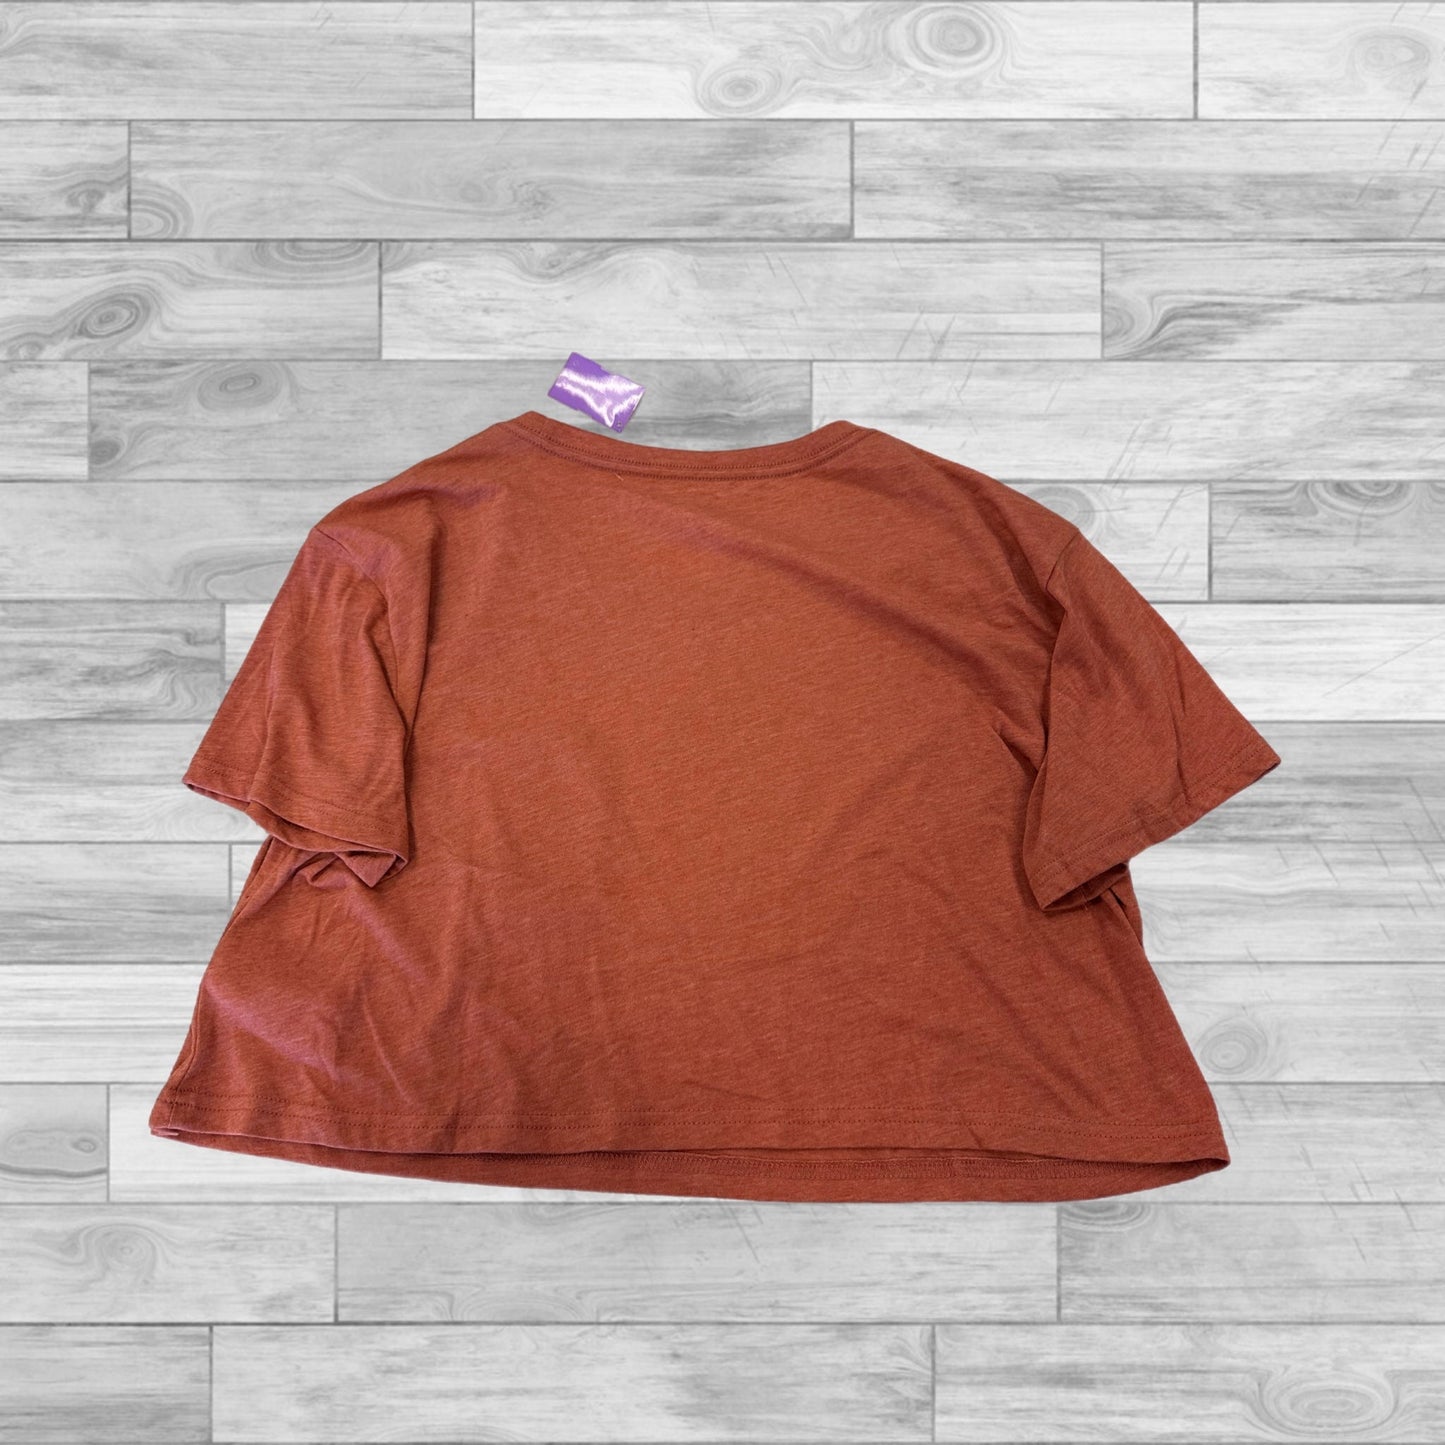 Orange Top Short Sleeve Basic Wrangler, Size L